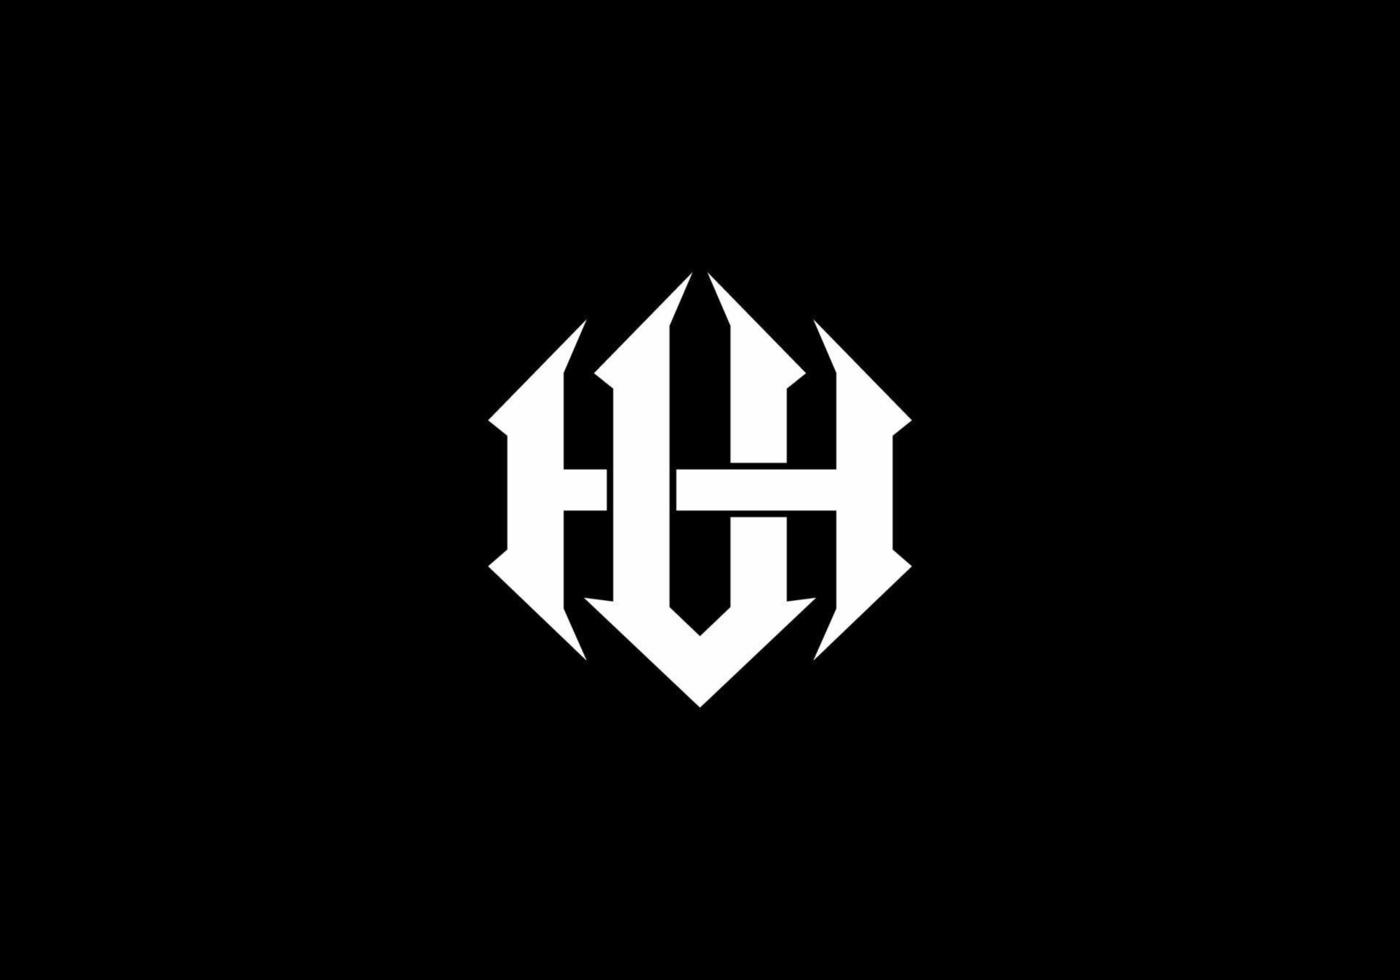 Vintage black and white VH or HV initial letter vector